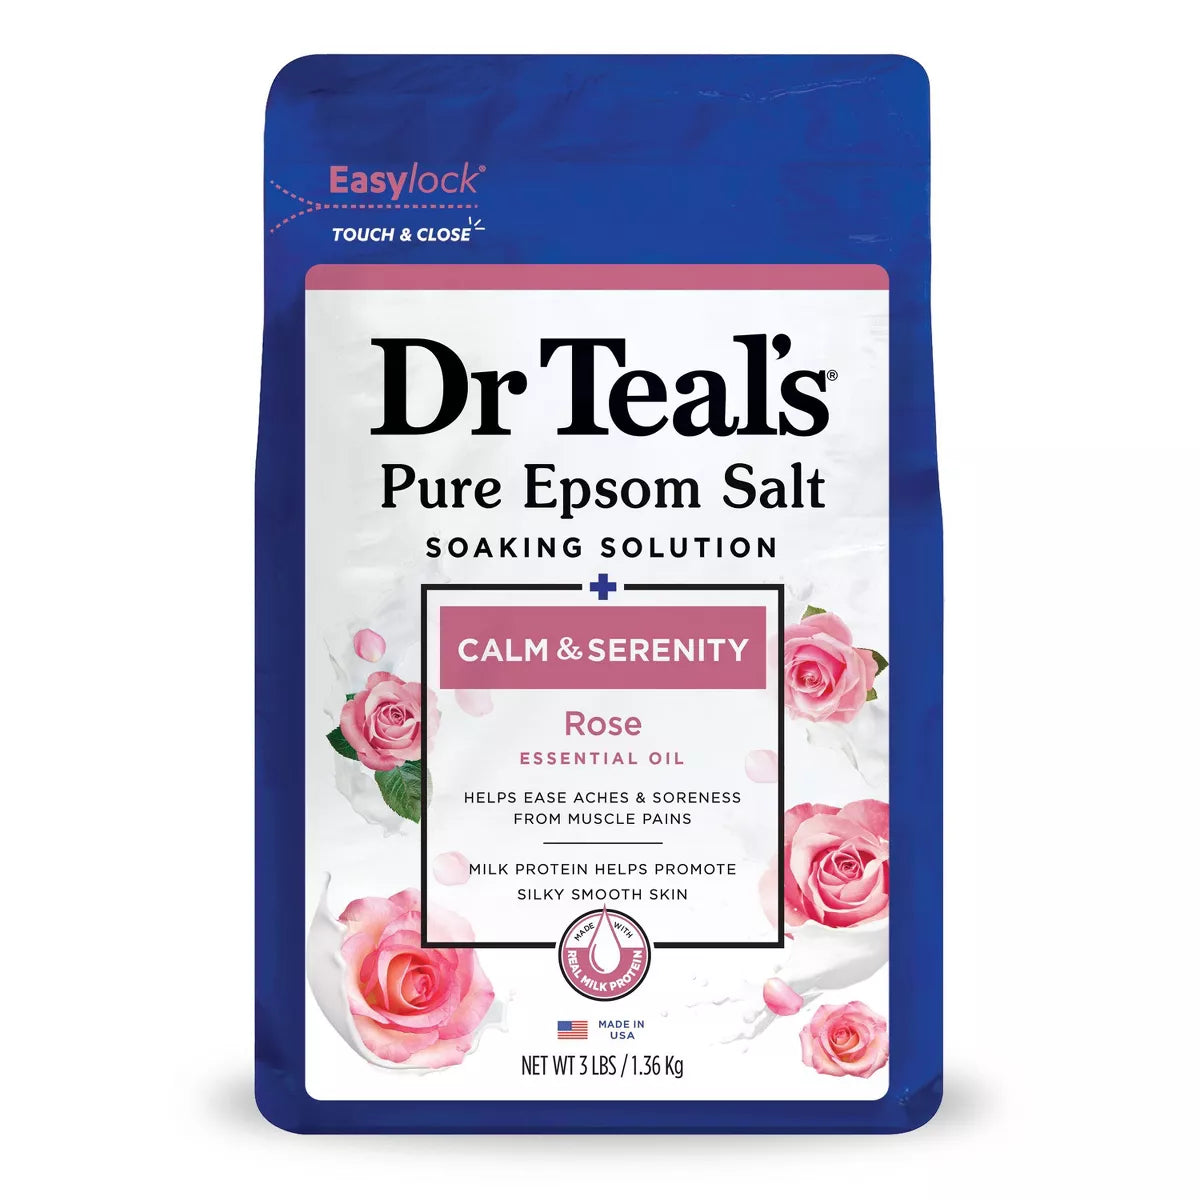 Dr Teal's Calm & Serenity Rose Pure Epsom Bath Salt - 3lb